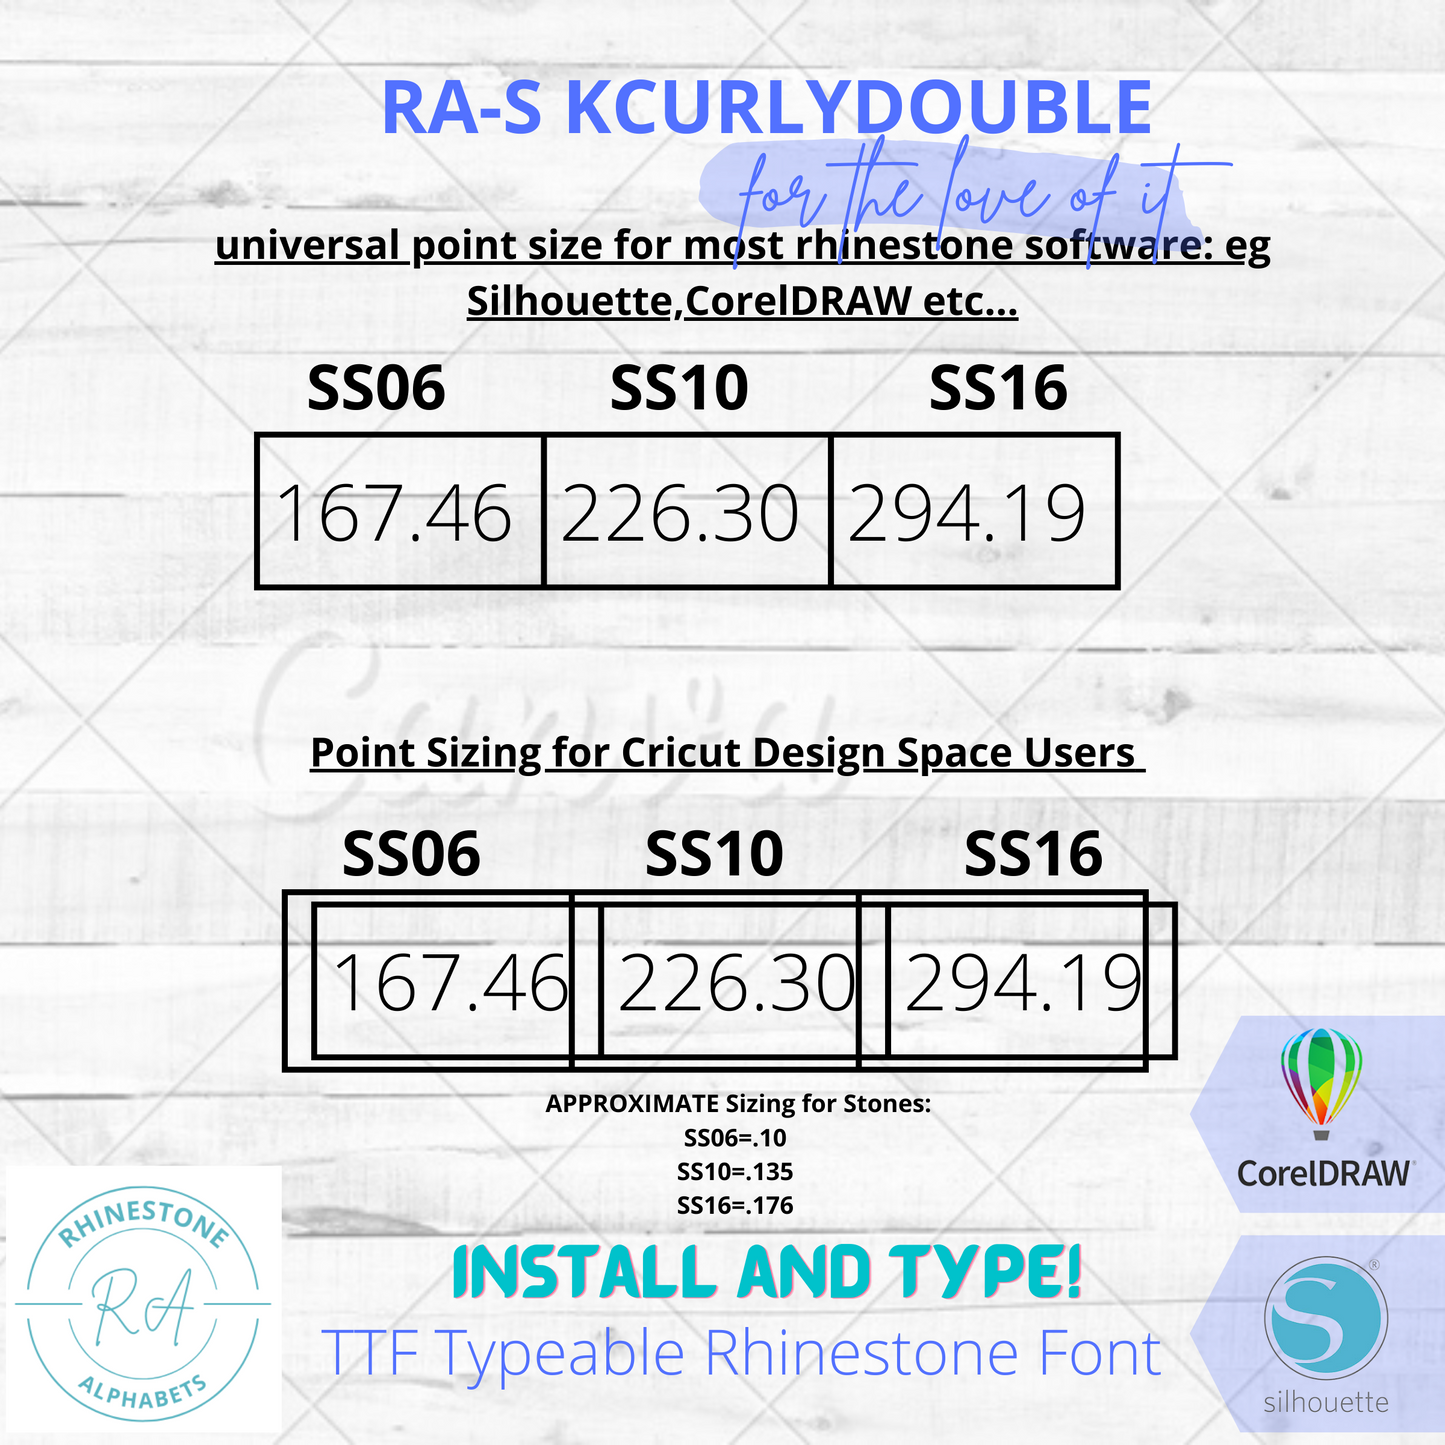 RA-S KCurly Double A TrueType Cursive Curly Rhinestone Font